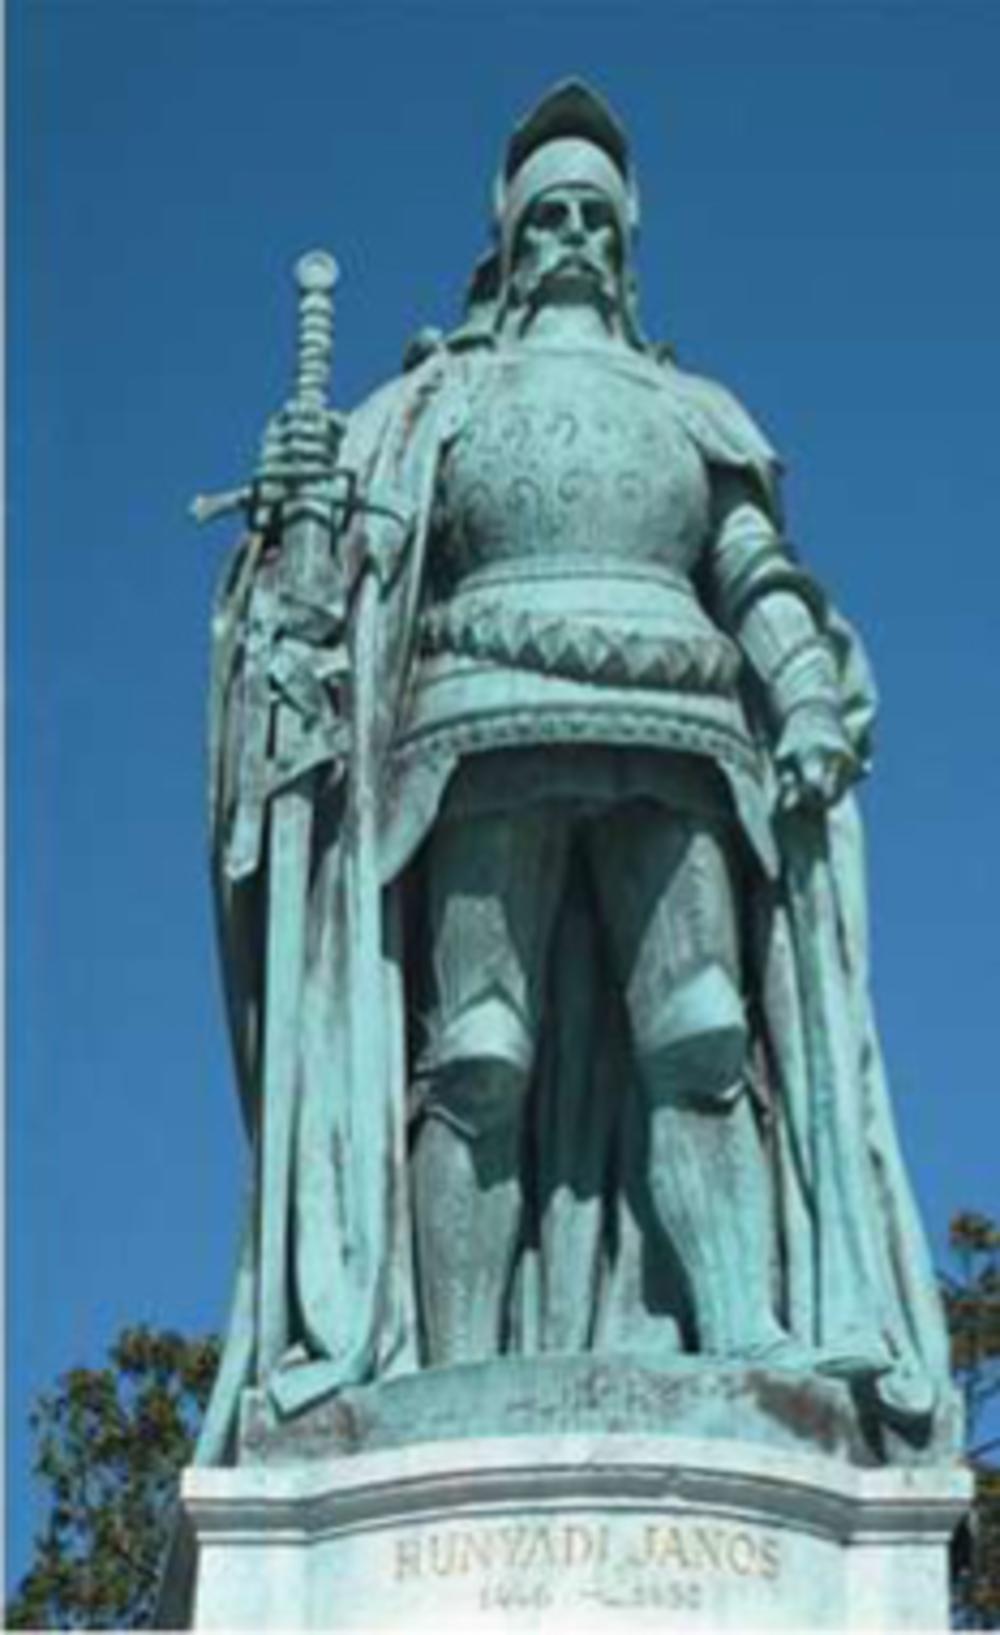 Standbeeld van János Hunyadi in Boedapest.